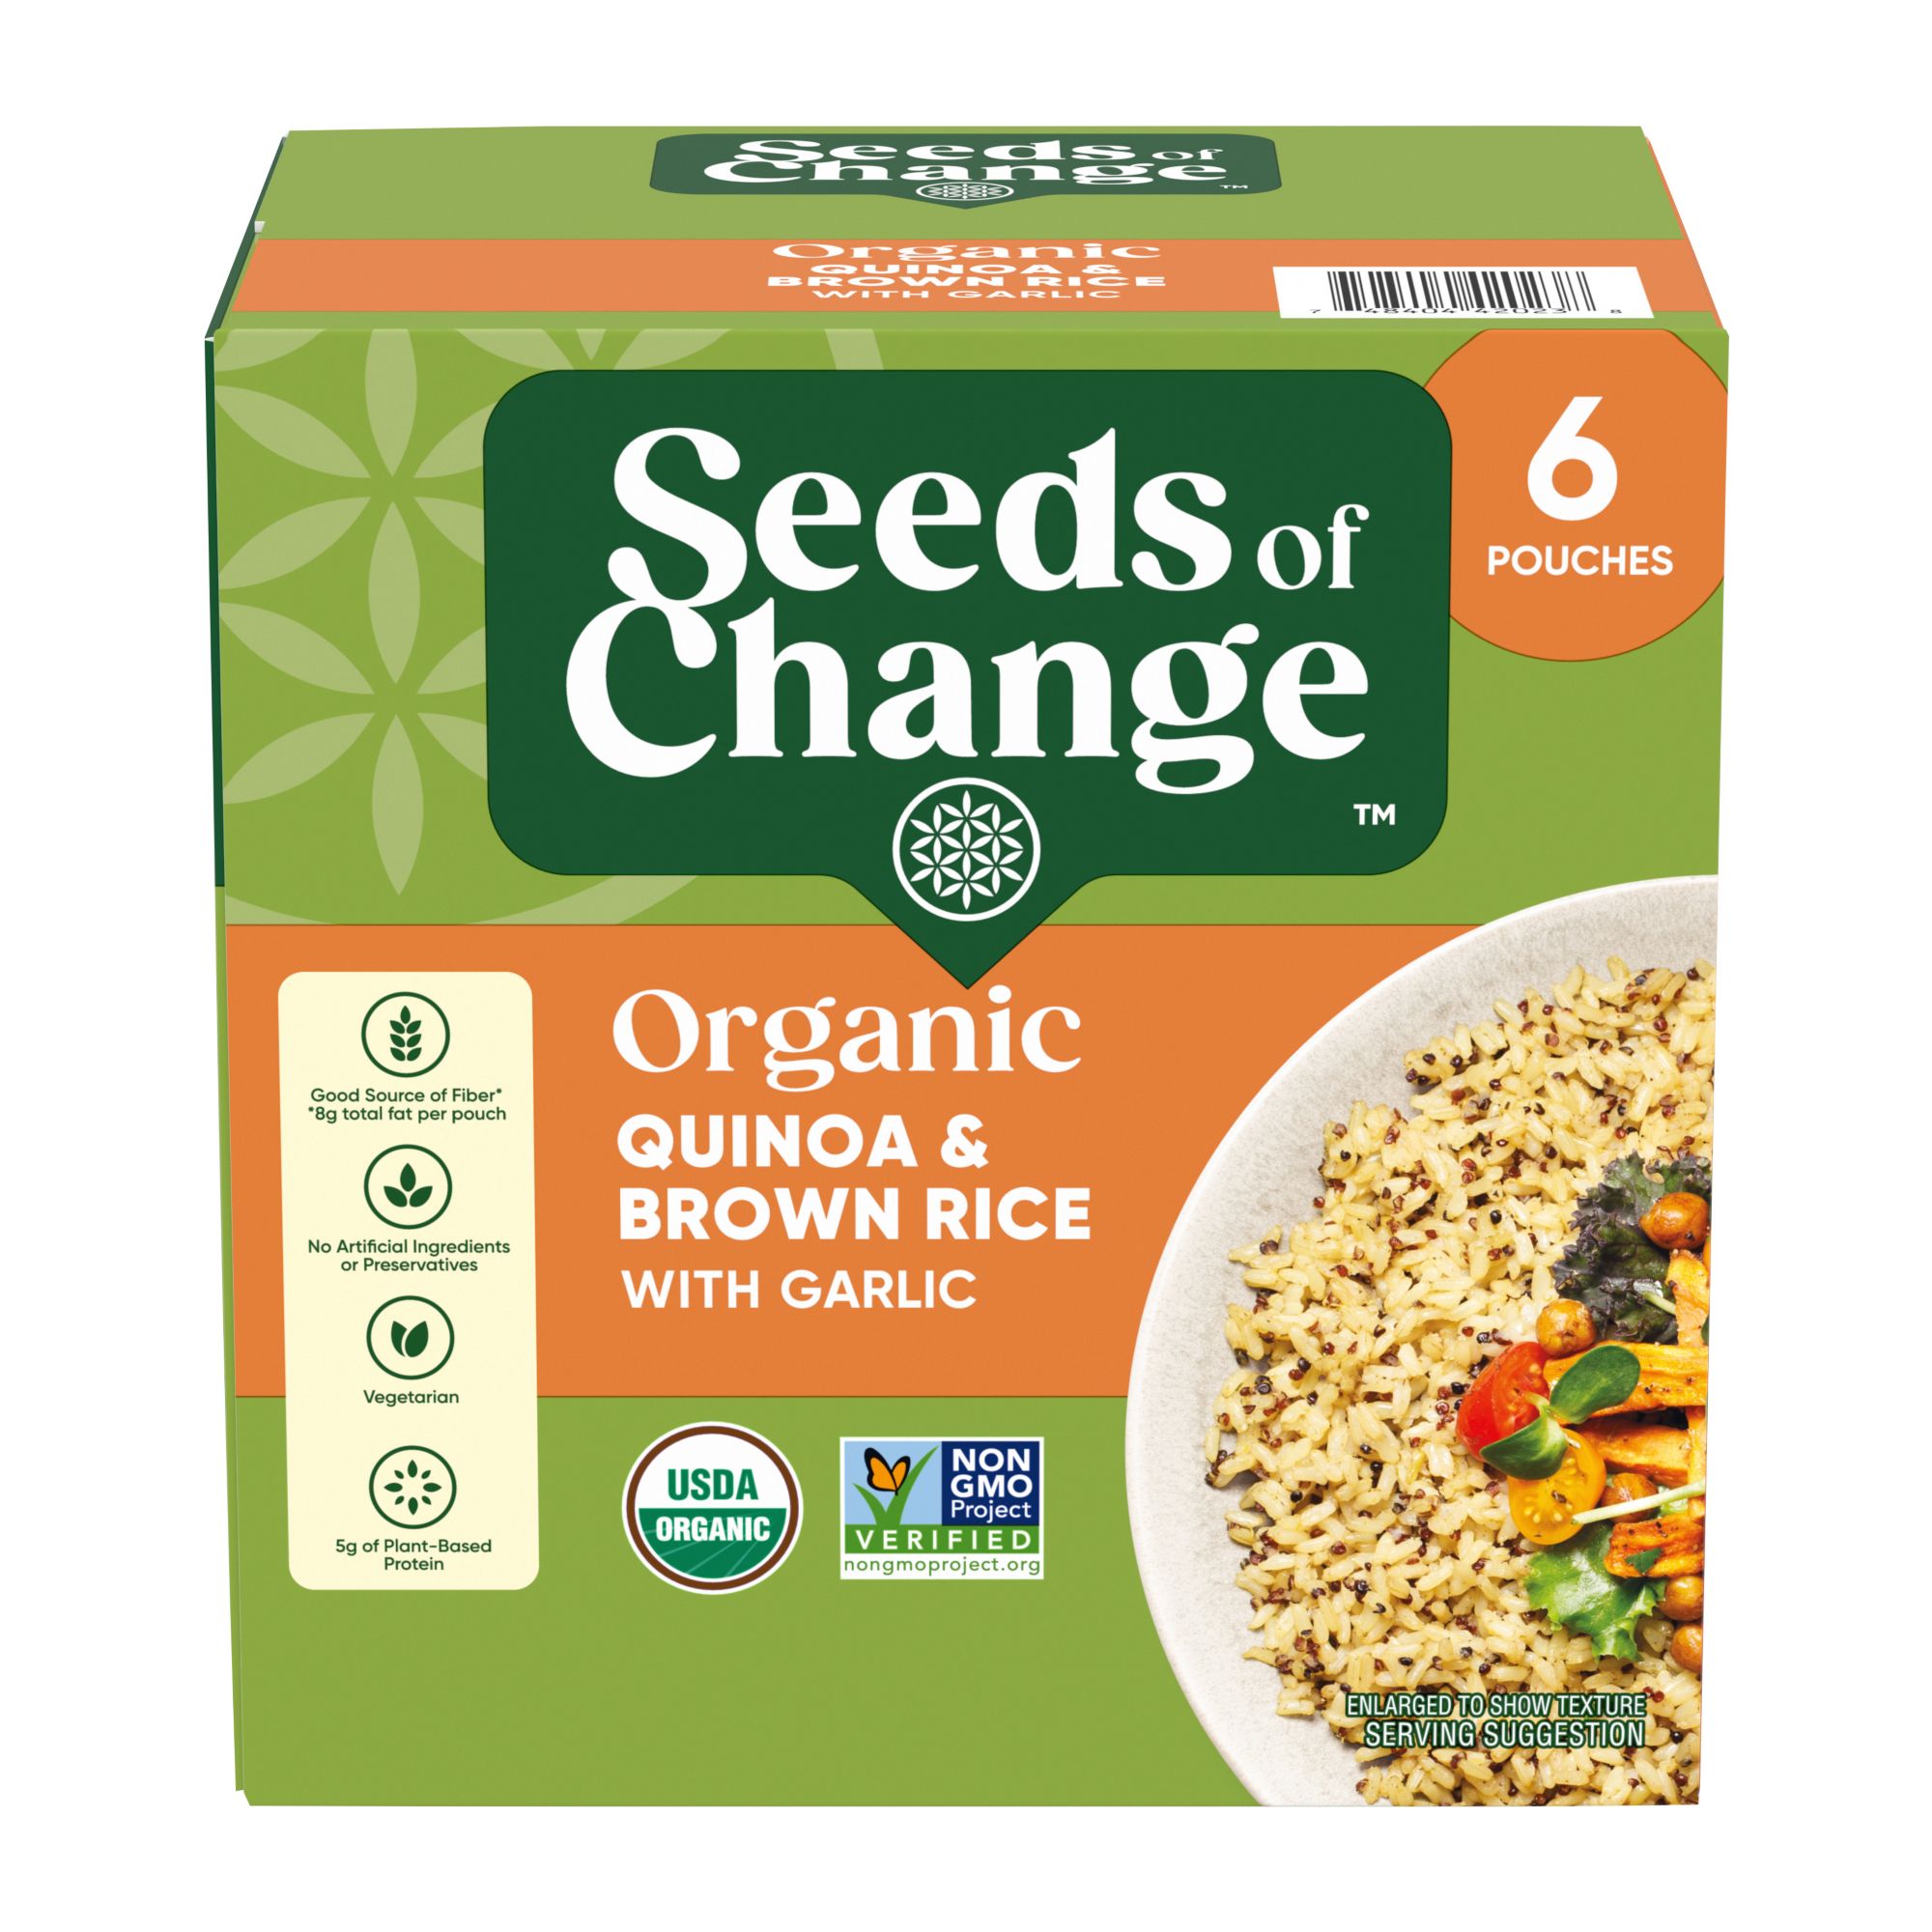 Seeds of Change Certified Organic Quinoa & Brown Rice with Garlic, 6 pk./8.5 oz.